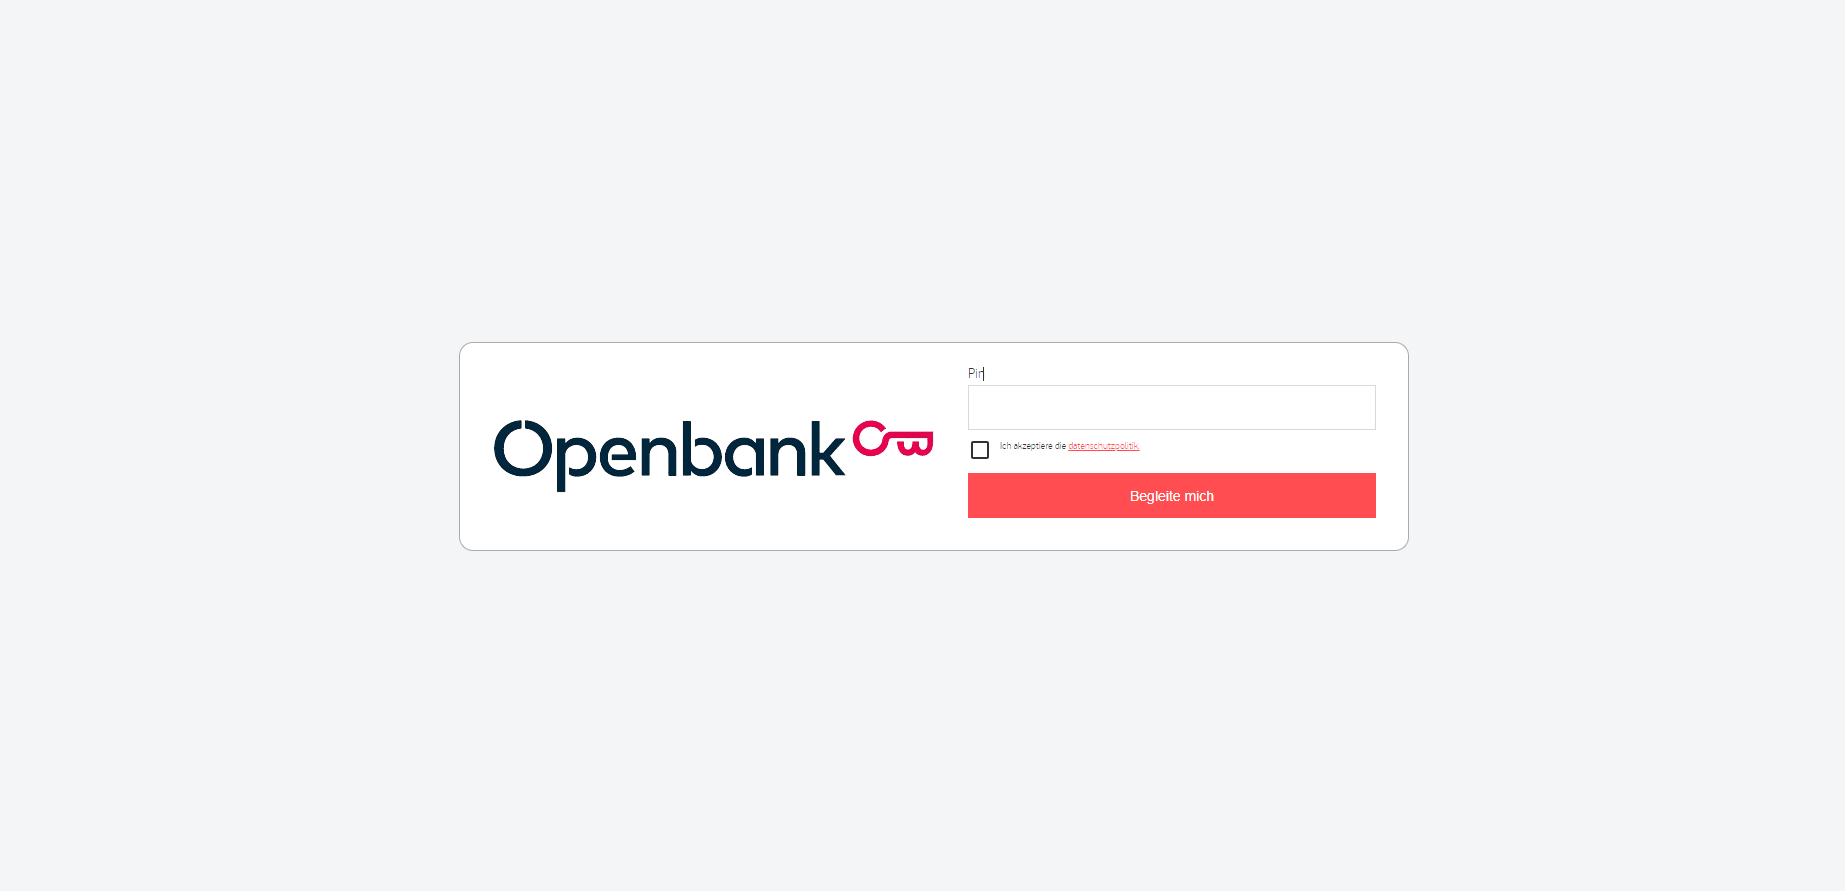 Desktop Pin Openbank